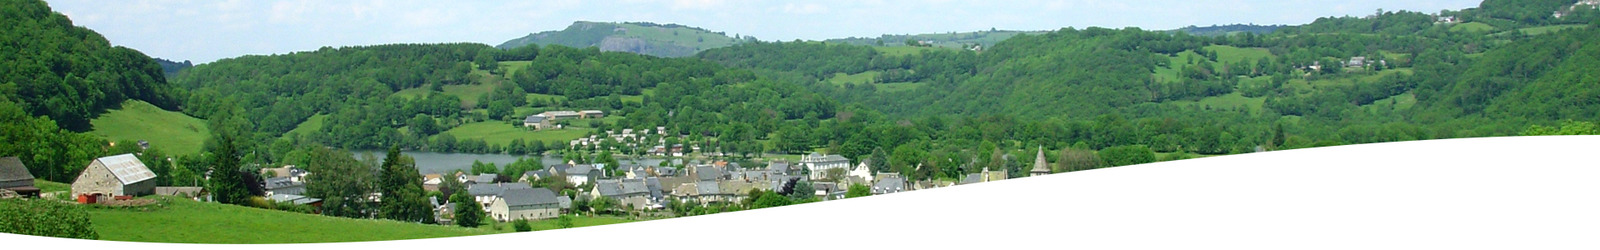 Conseil municipal Menet Cantal